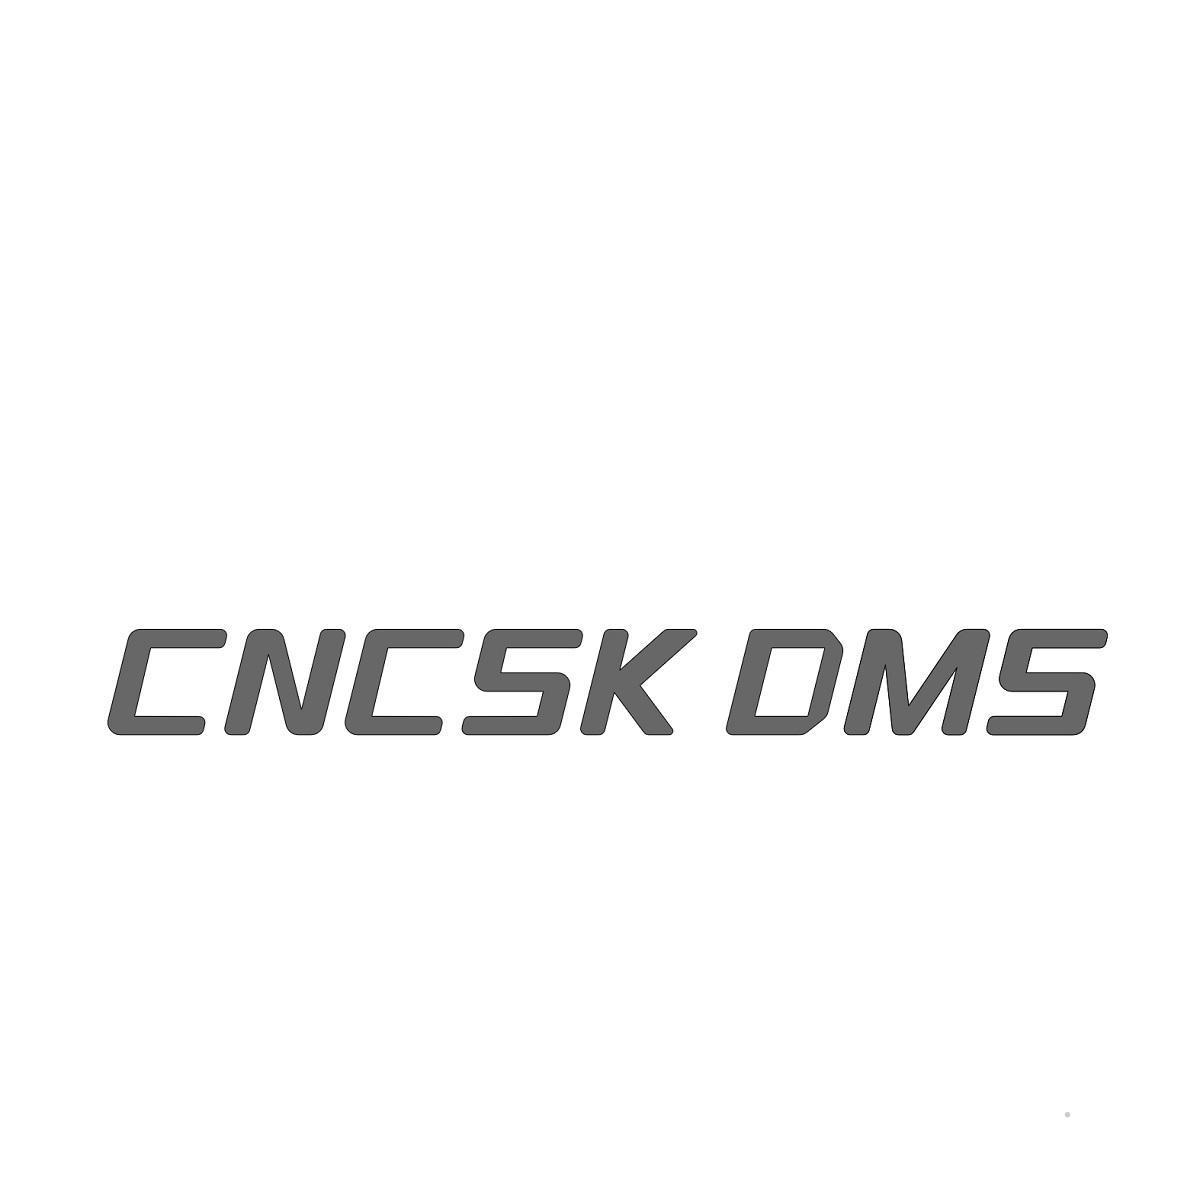 CNCSK DMS医疗器械